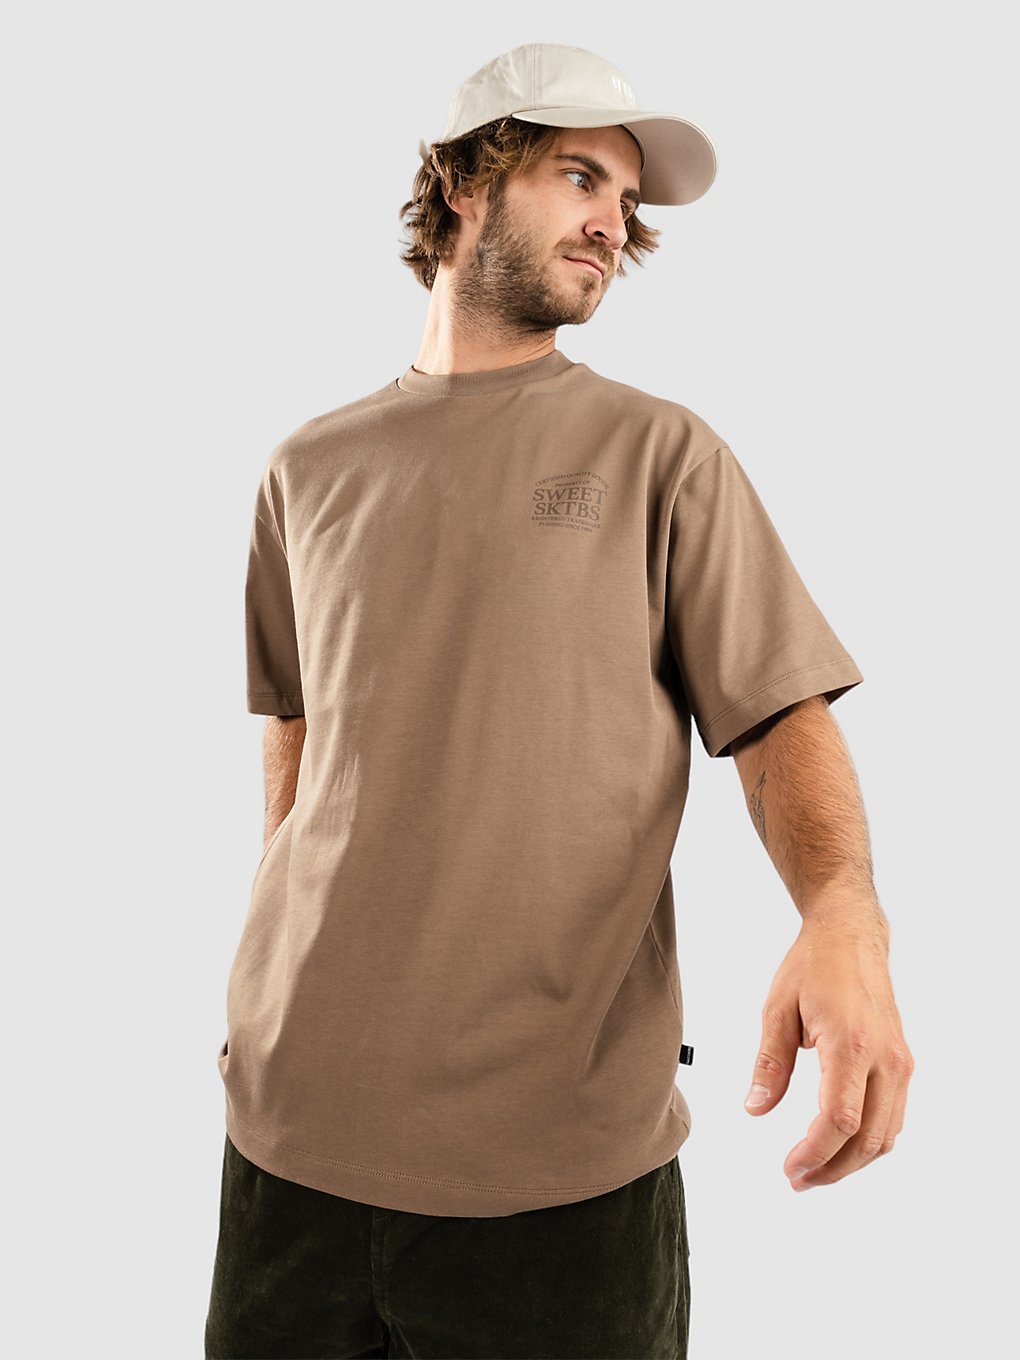 SWEET SKTBS Loose Certified T-Shirt brown kaufen